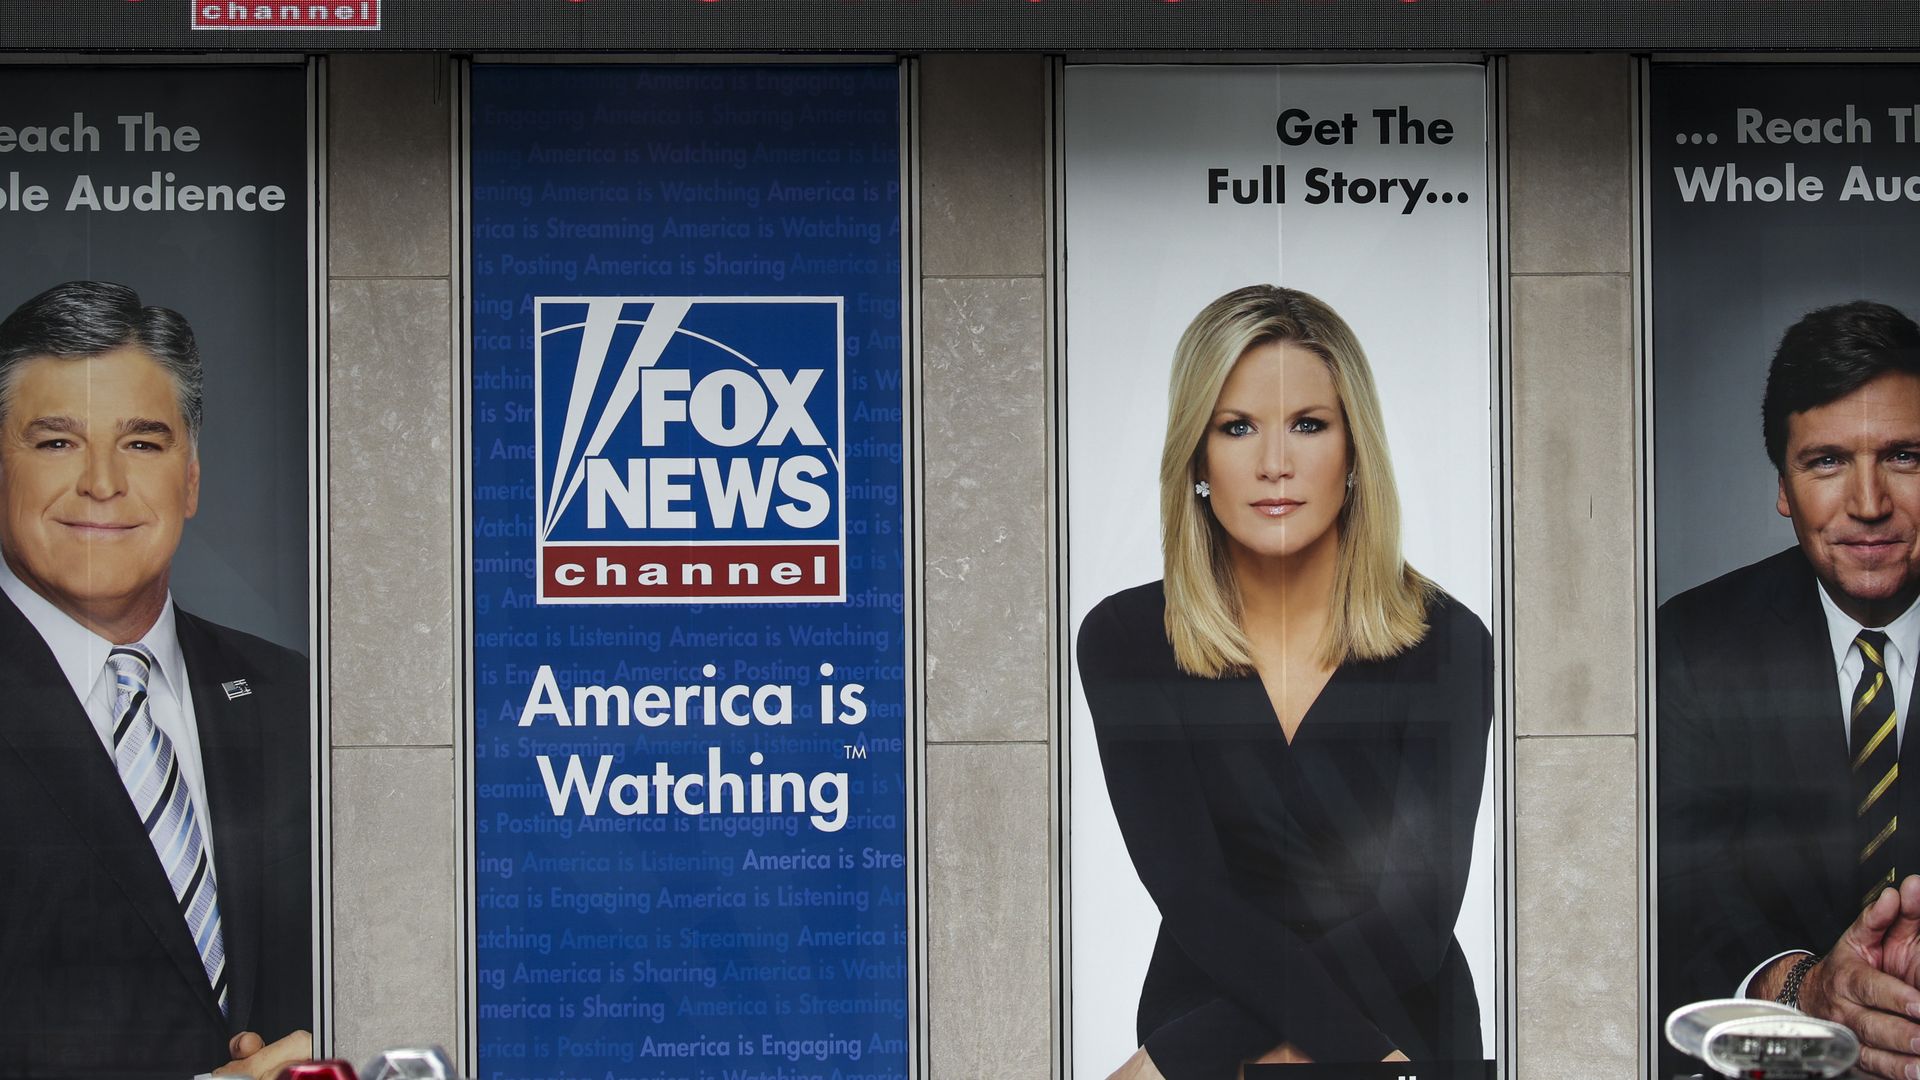 Fox News Betting App